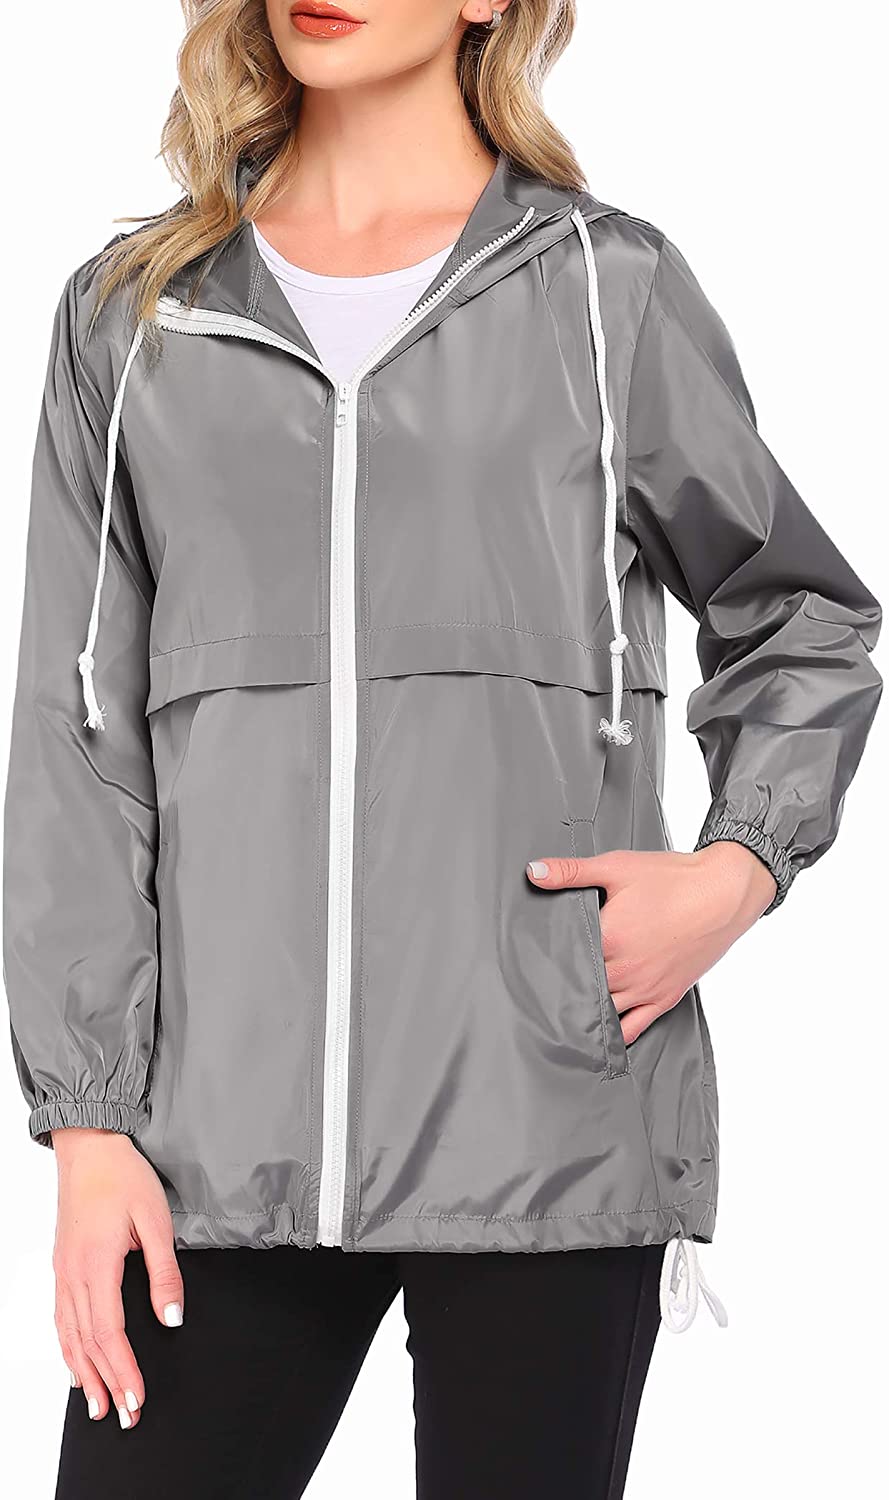 Beyove Womens Waterproof Raincoat Lightweight Rain Jacket Hooded Windbreaker with Pocket for Outdoor